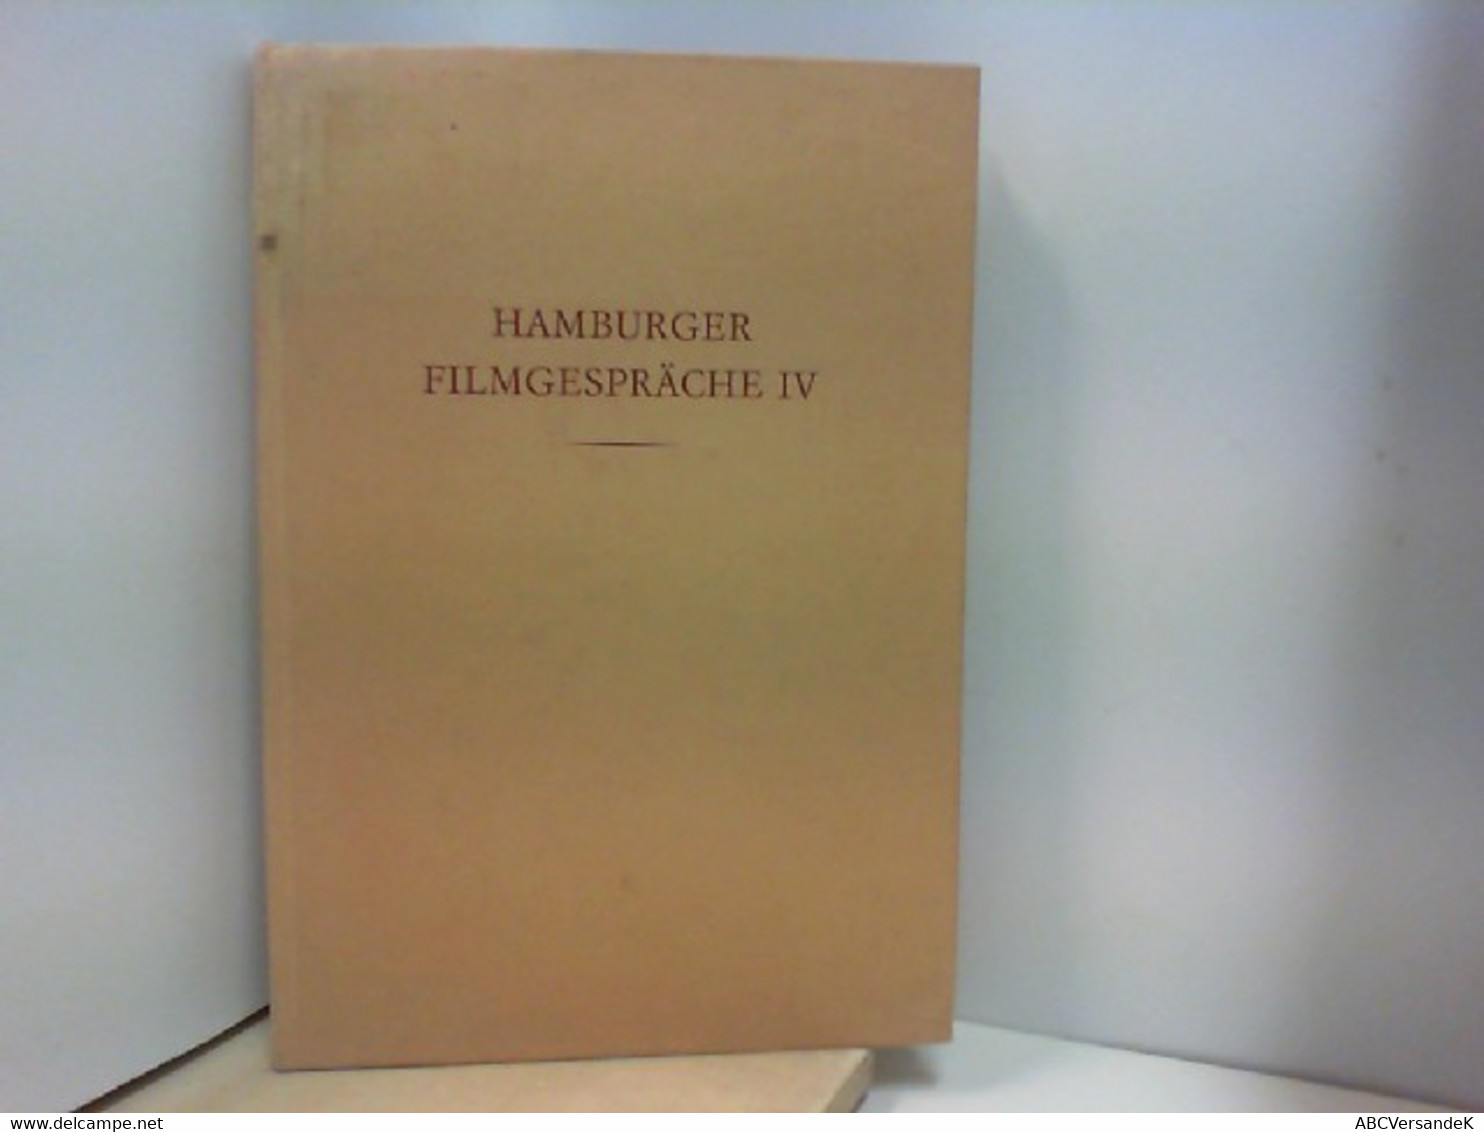 Hamburger Filmgespräche IV - Film